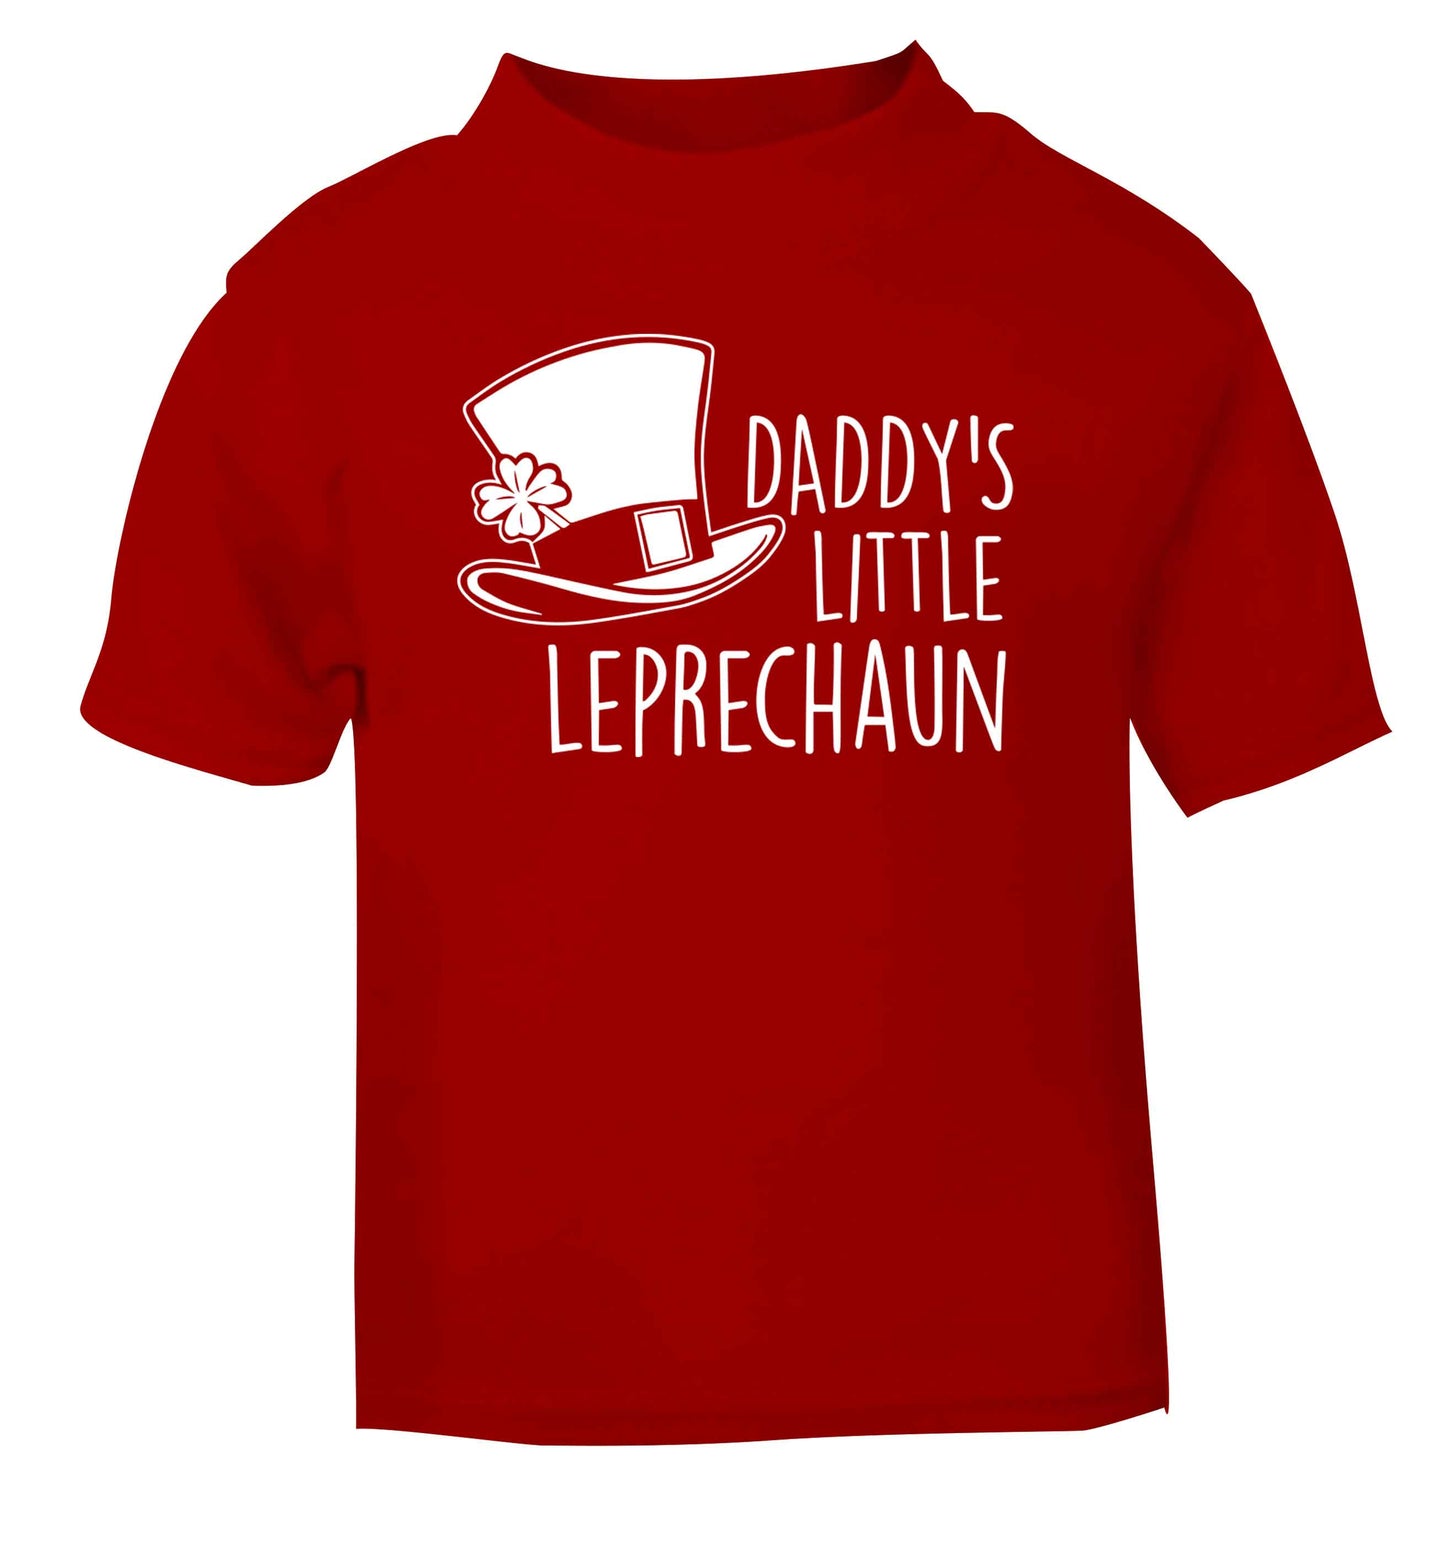 Daddy's little leprechaun red baby toddler Tshirt 2 Years